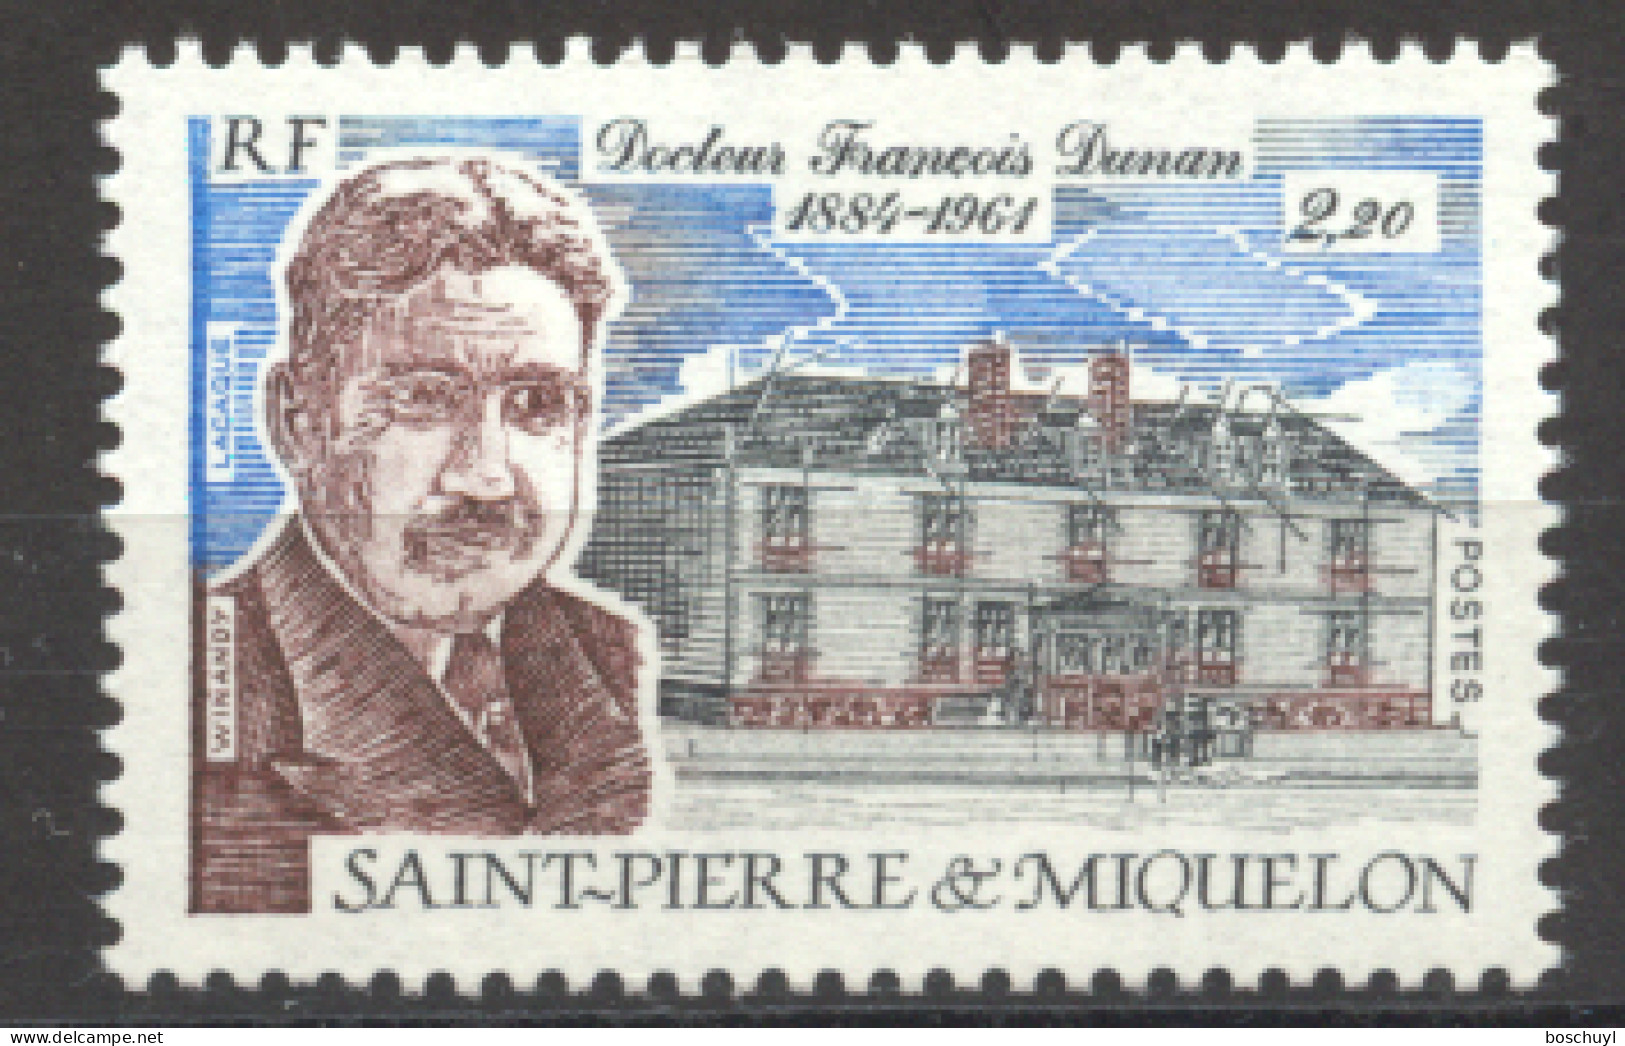 St Pierre And Miquelon, 1987, Francois Dunan, Doctor, Physician, Medicine, MNH, Michel 544 - Nuovi